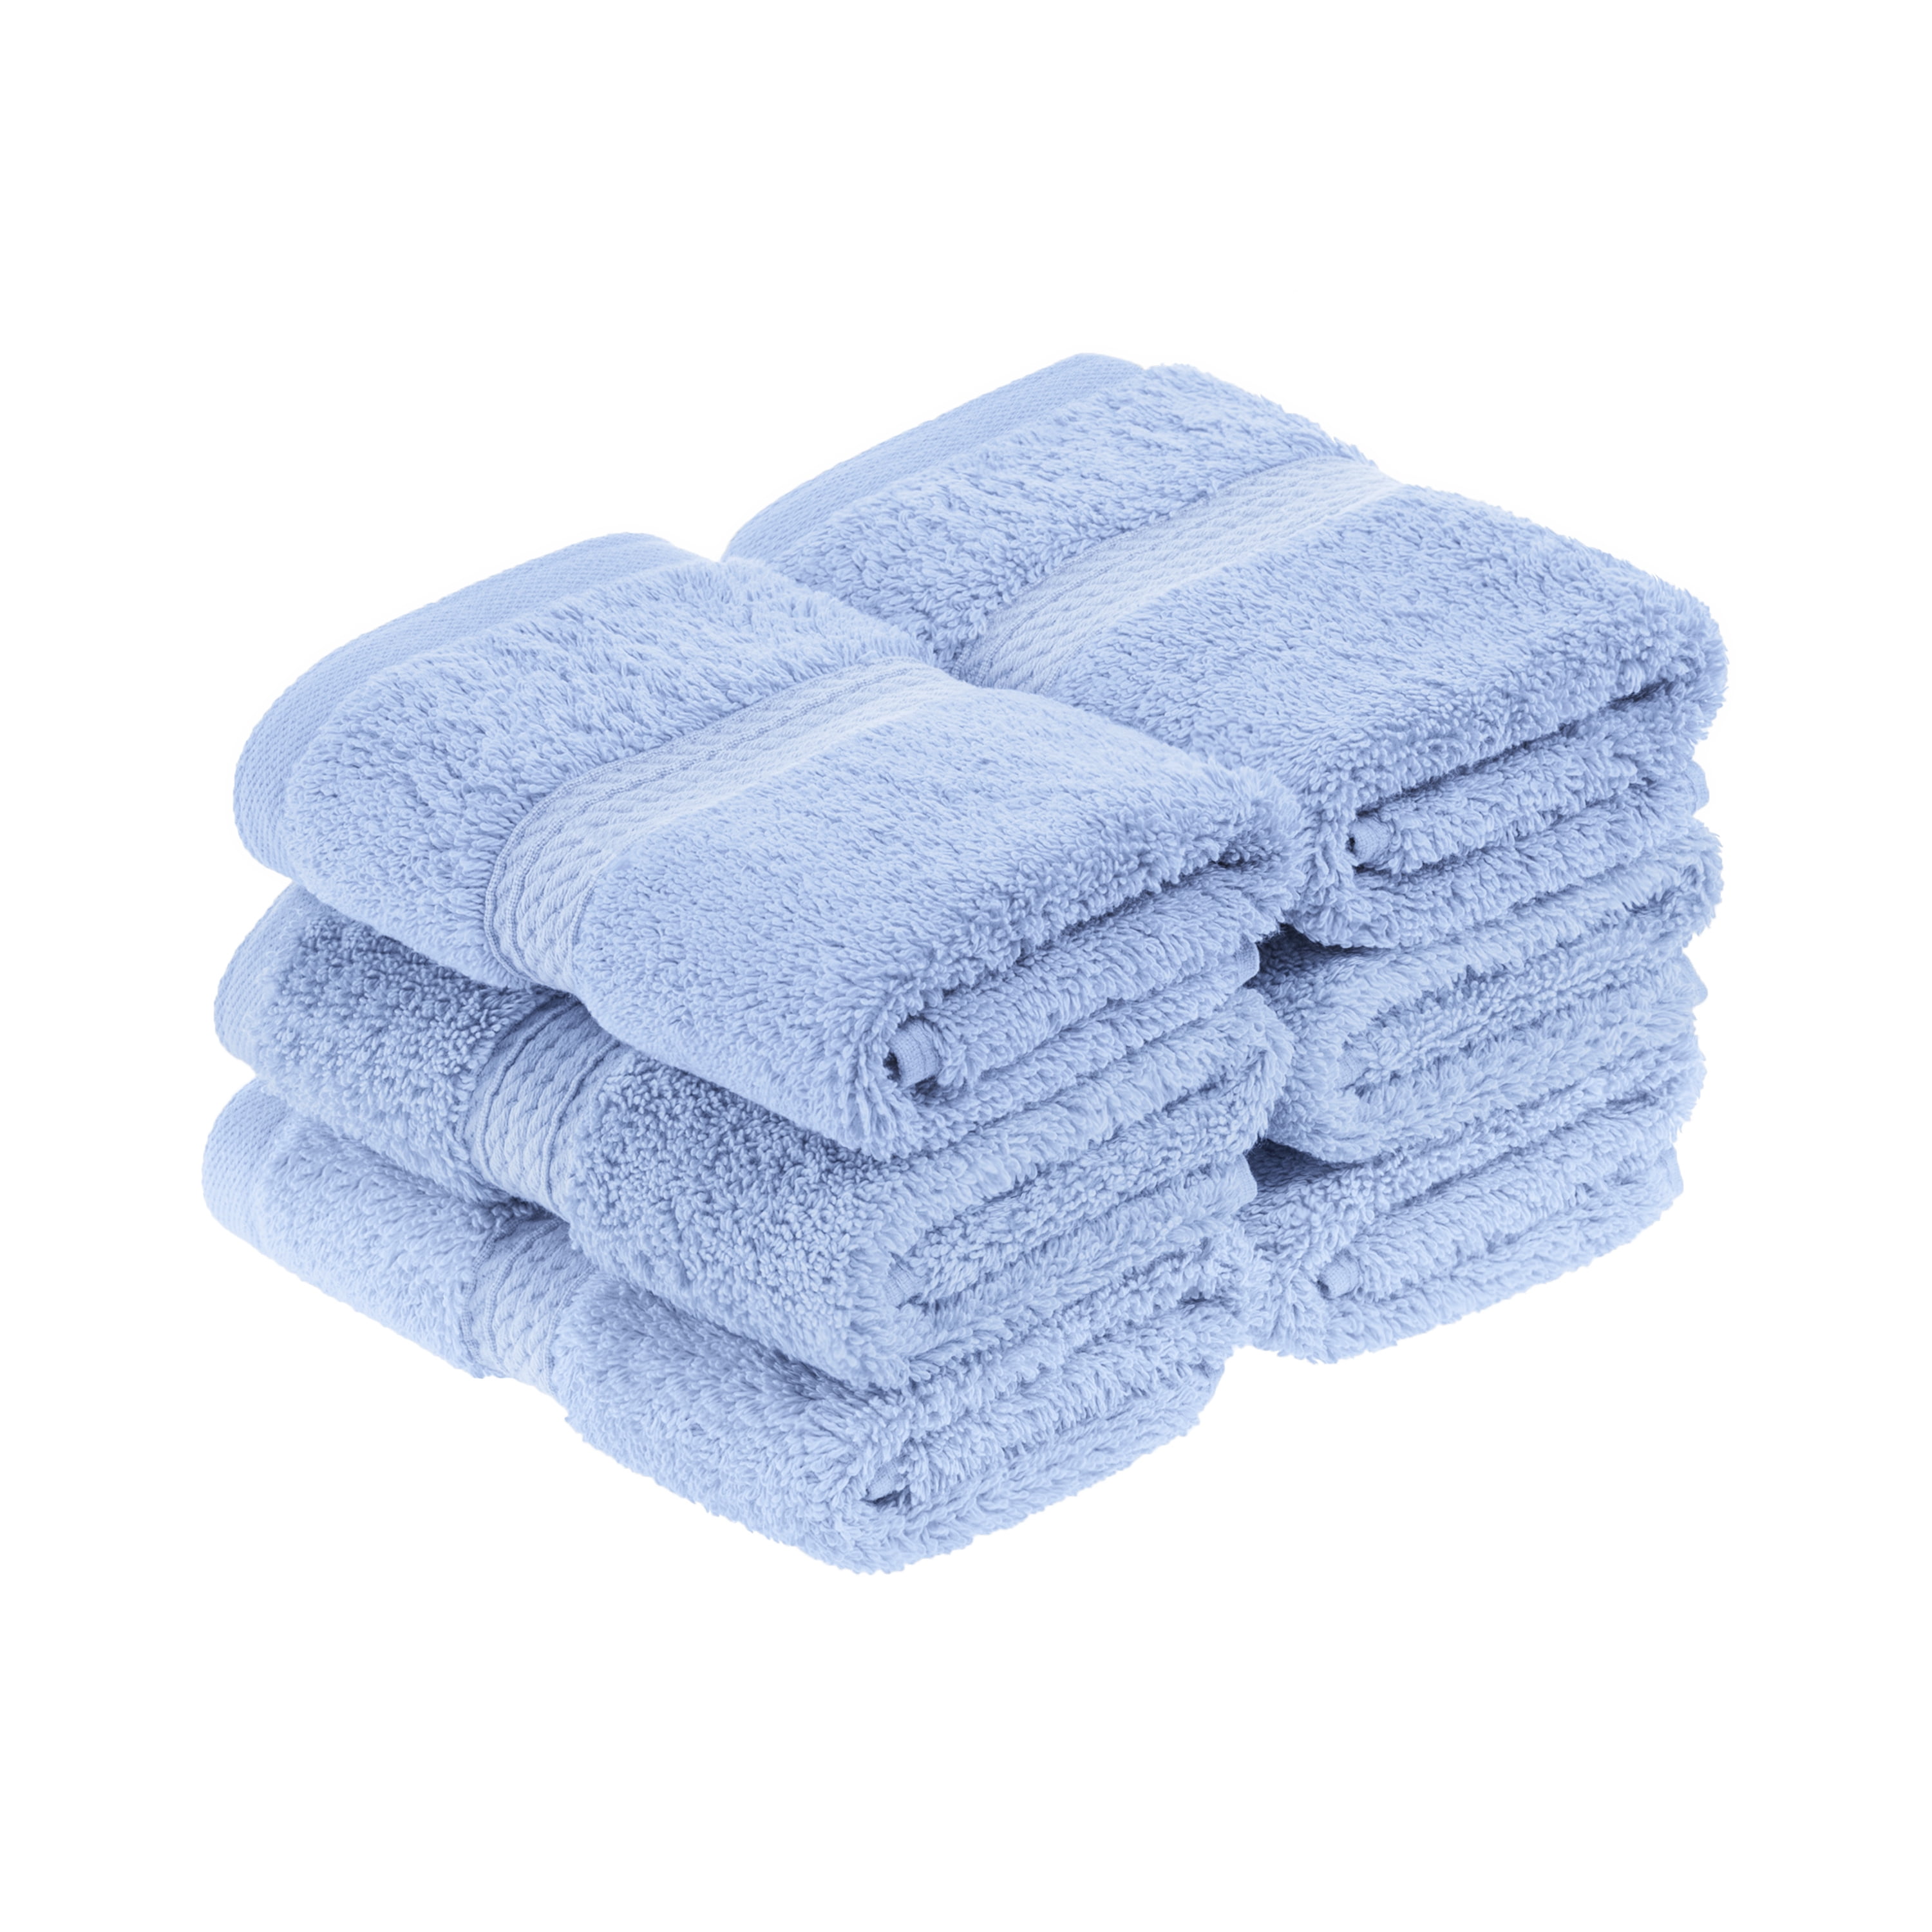 Premium Plush Bath Sheets – Everlastly